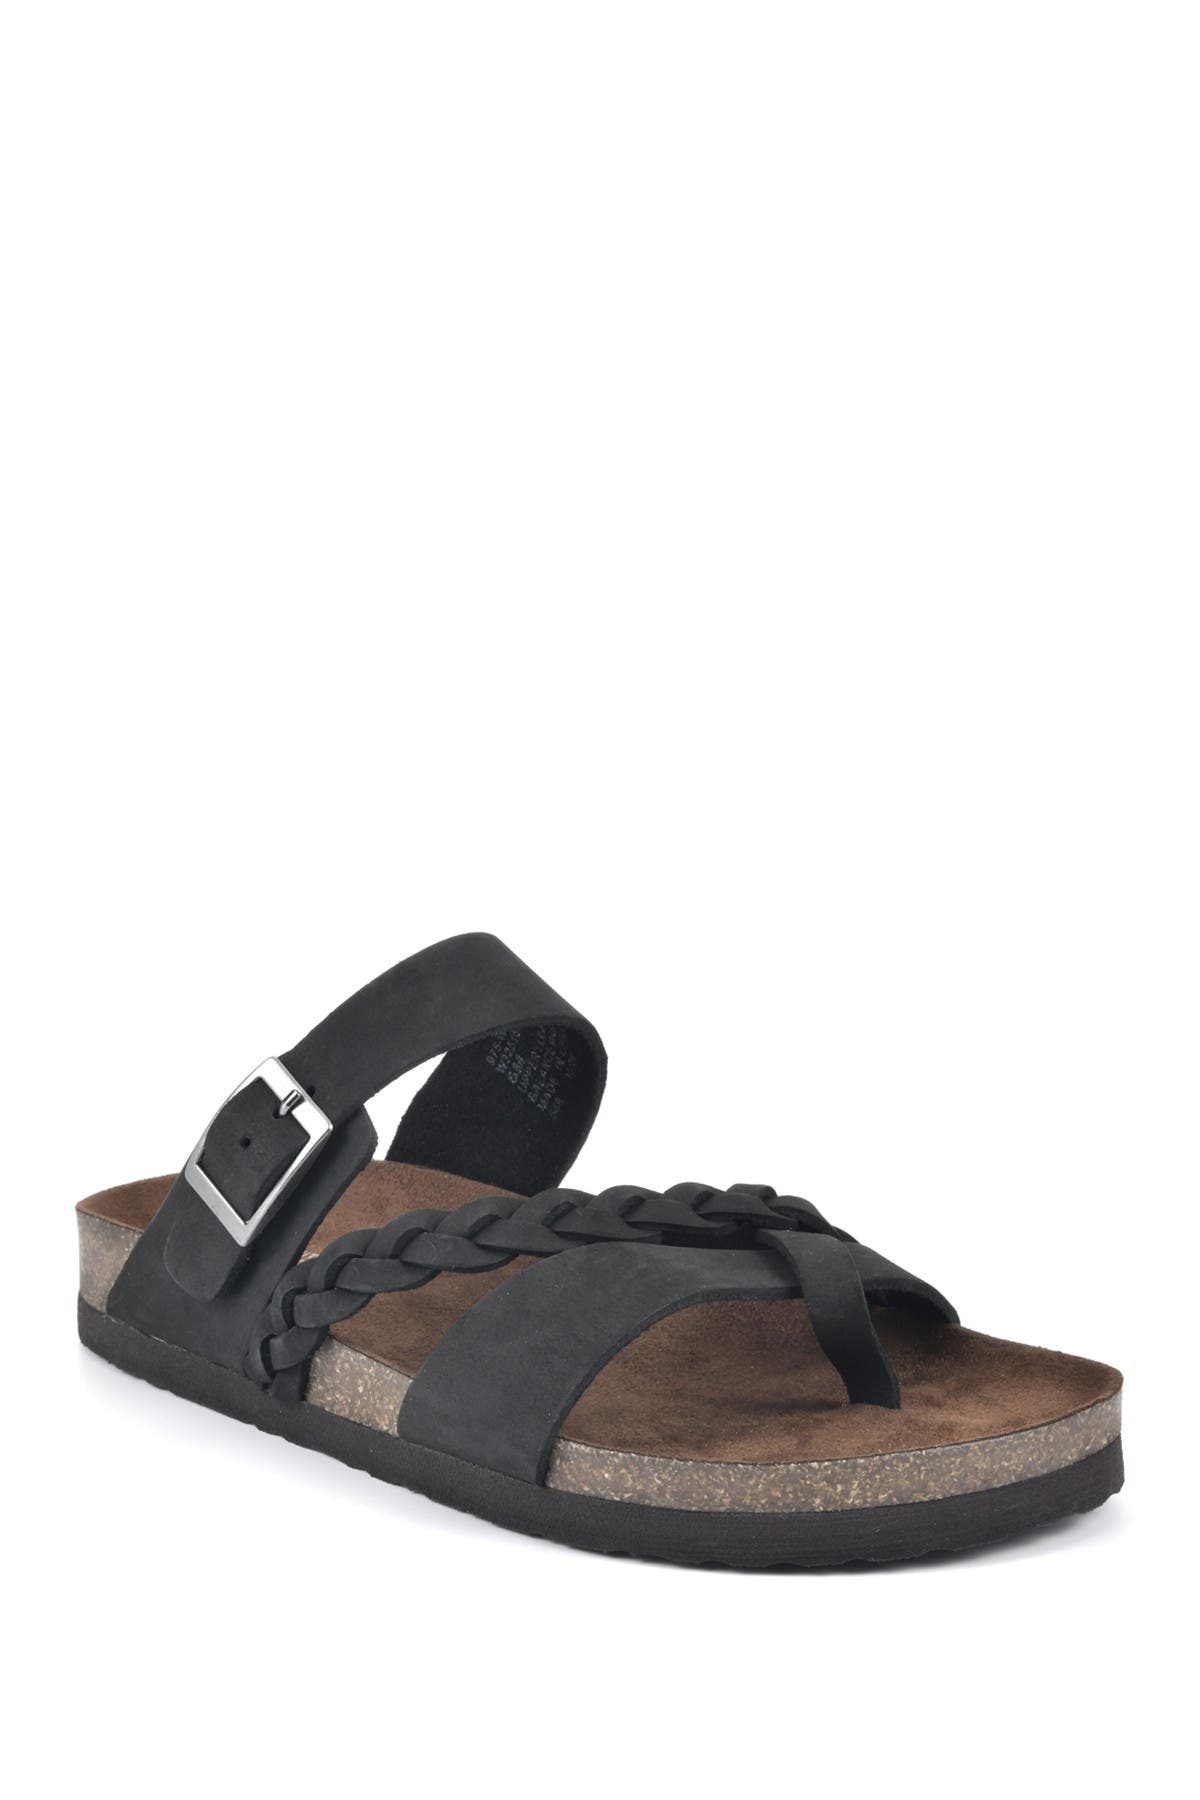 White Mountain Footwear Hazy Leather Footbed Sandal In Black/nubuck